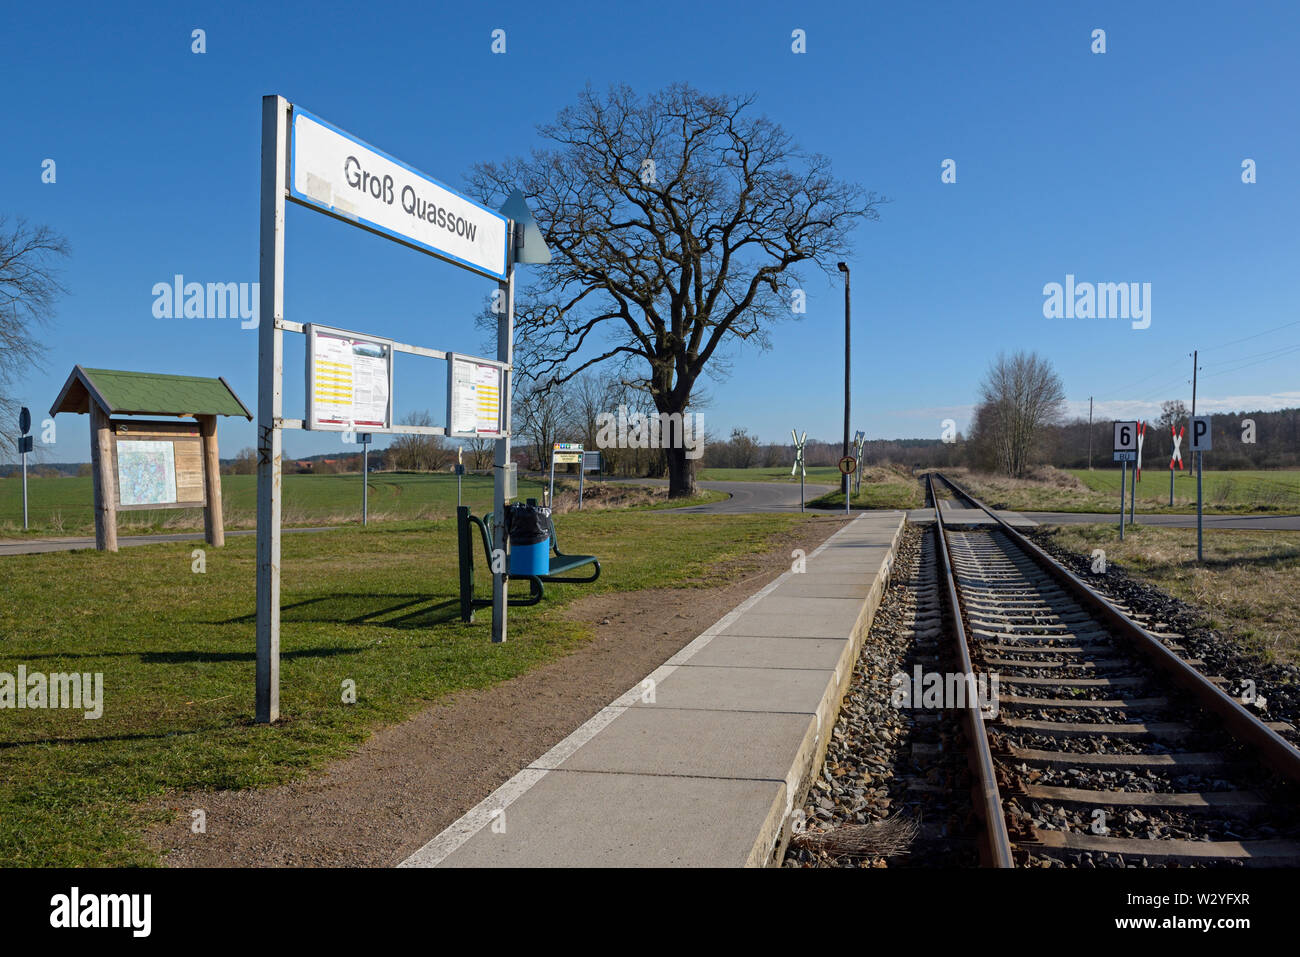 Small railway station, april, Gross Quassow, Mecklenburg-Vorpommern, Germany Stock Photo